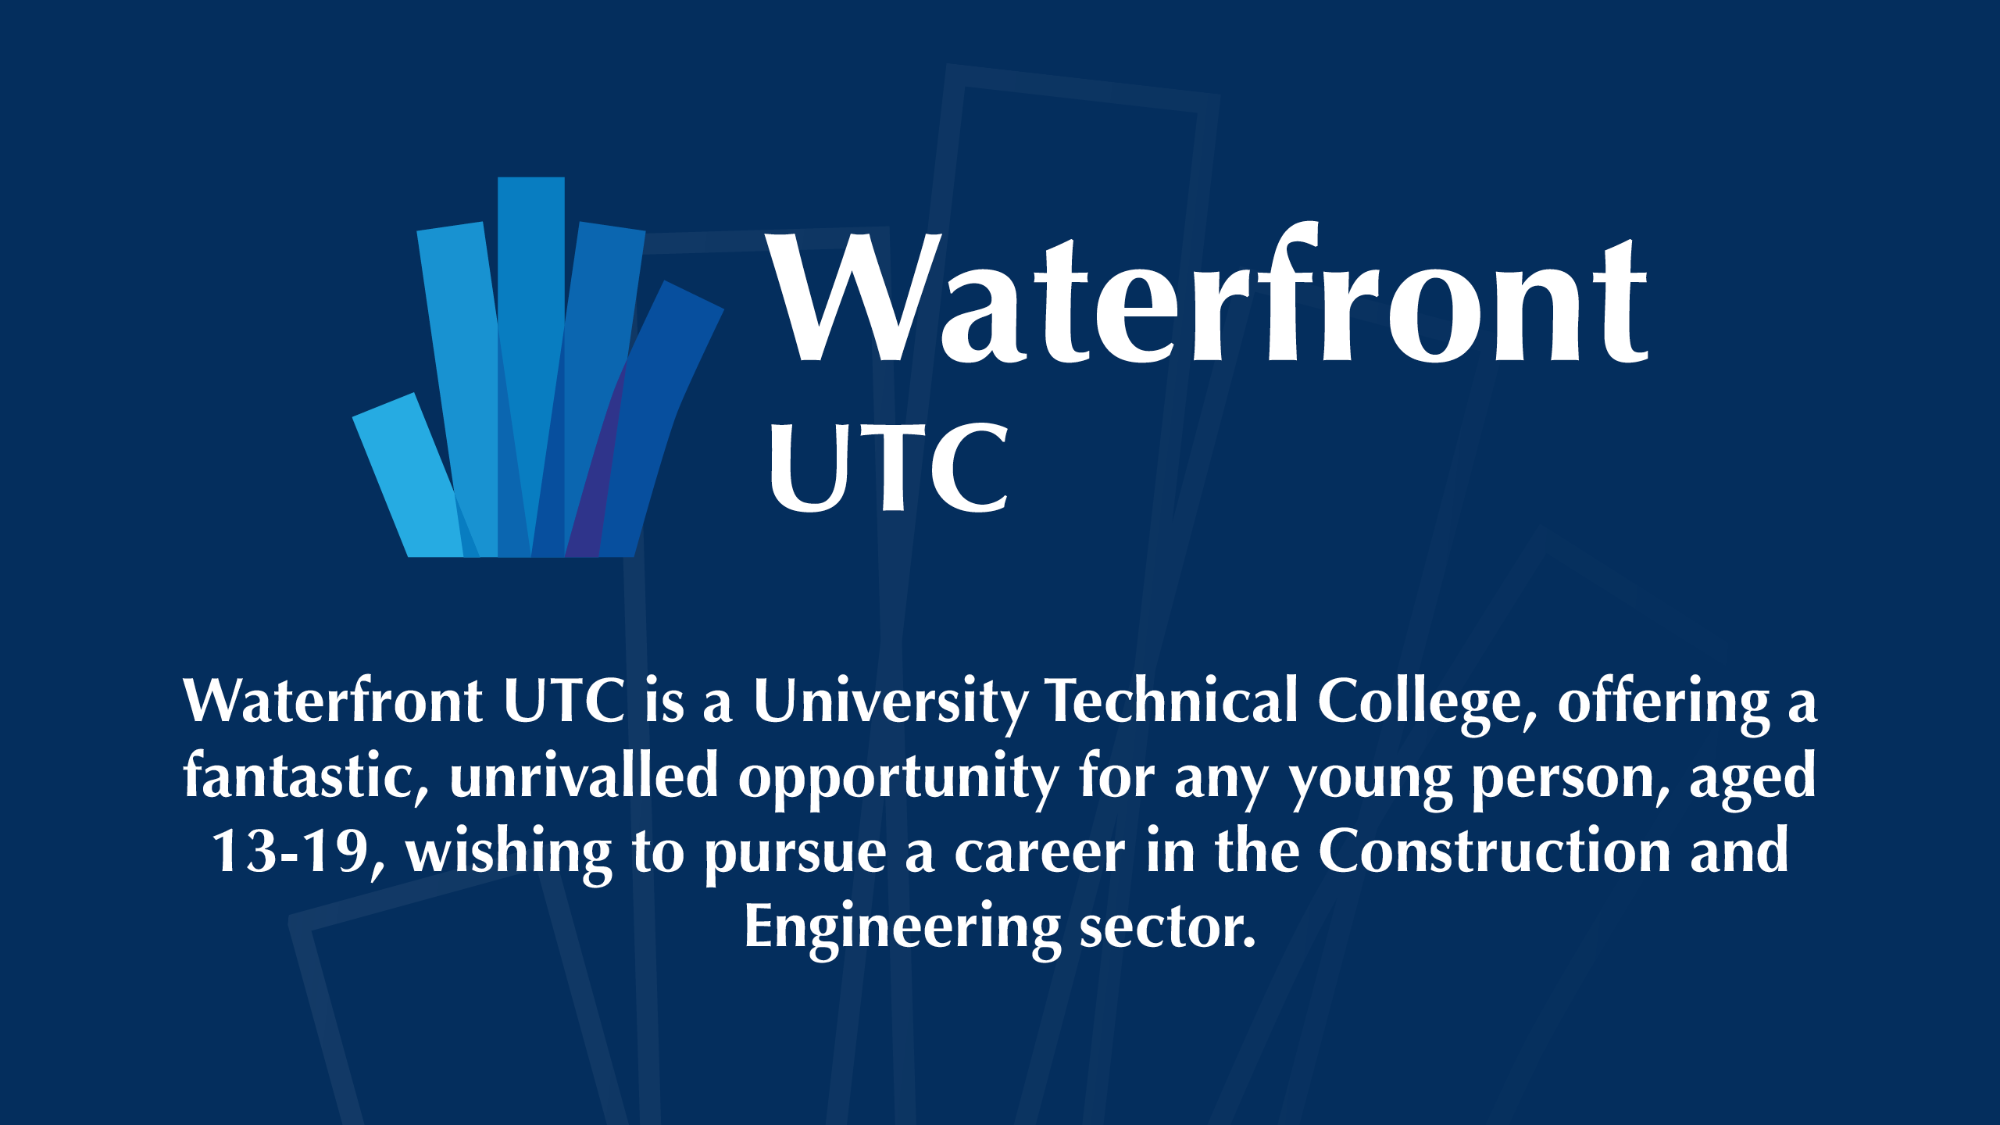 Waterfront UTC logo on dark blue background.